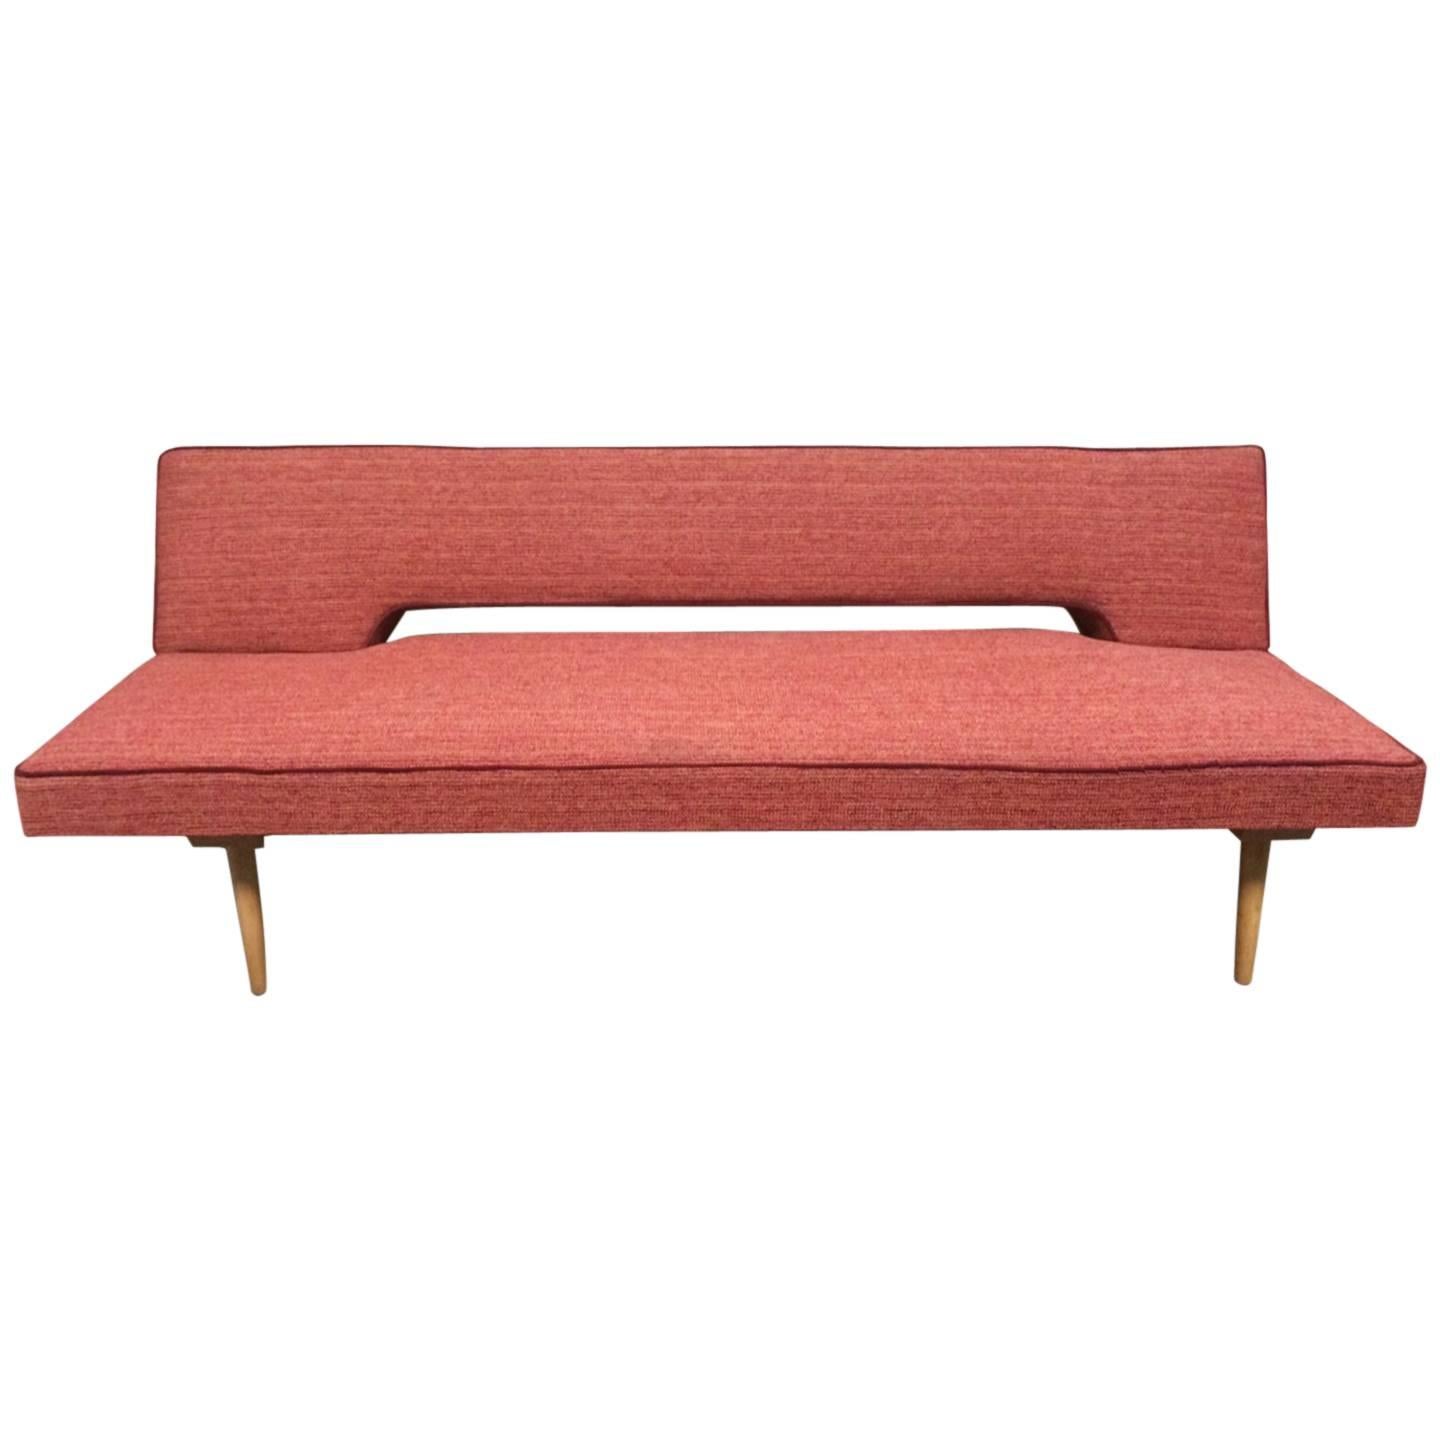 Adjustable Bed/ Bench For Sale